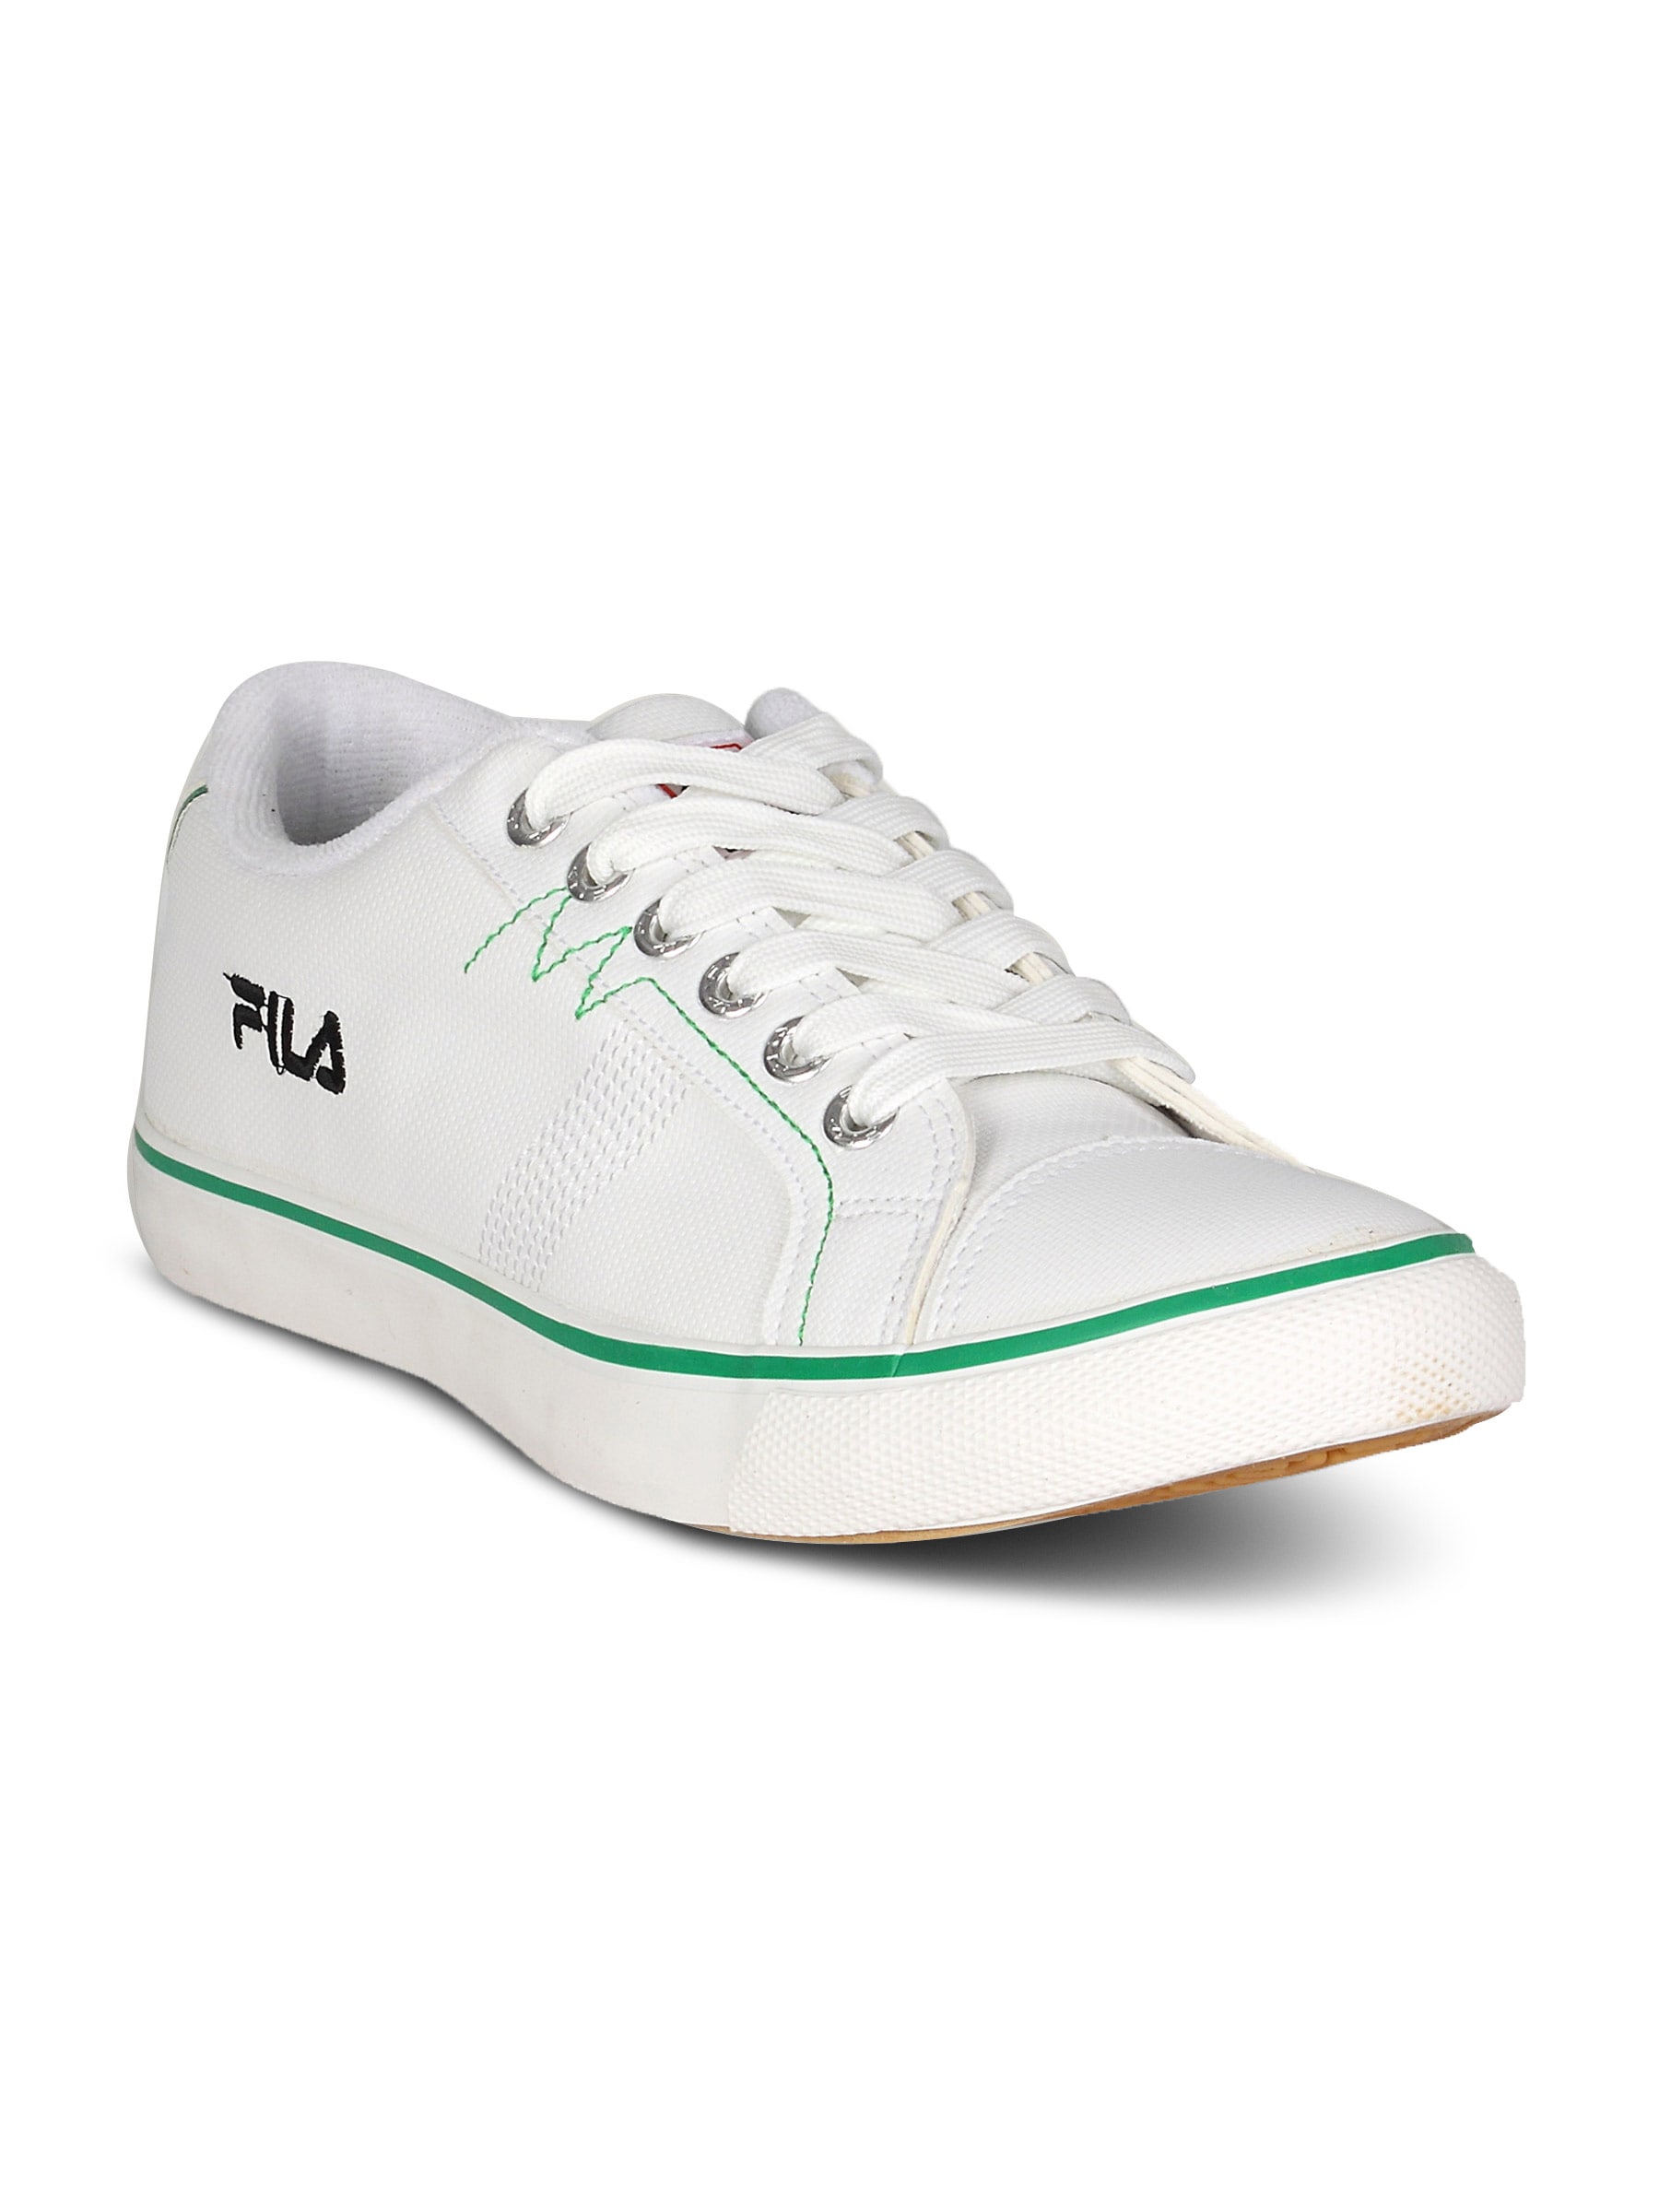 Fila Men's Passion White Green Shoe